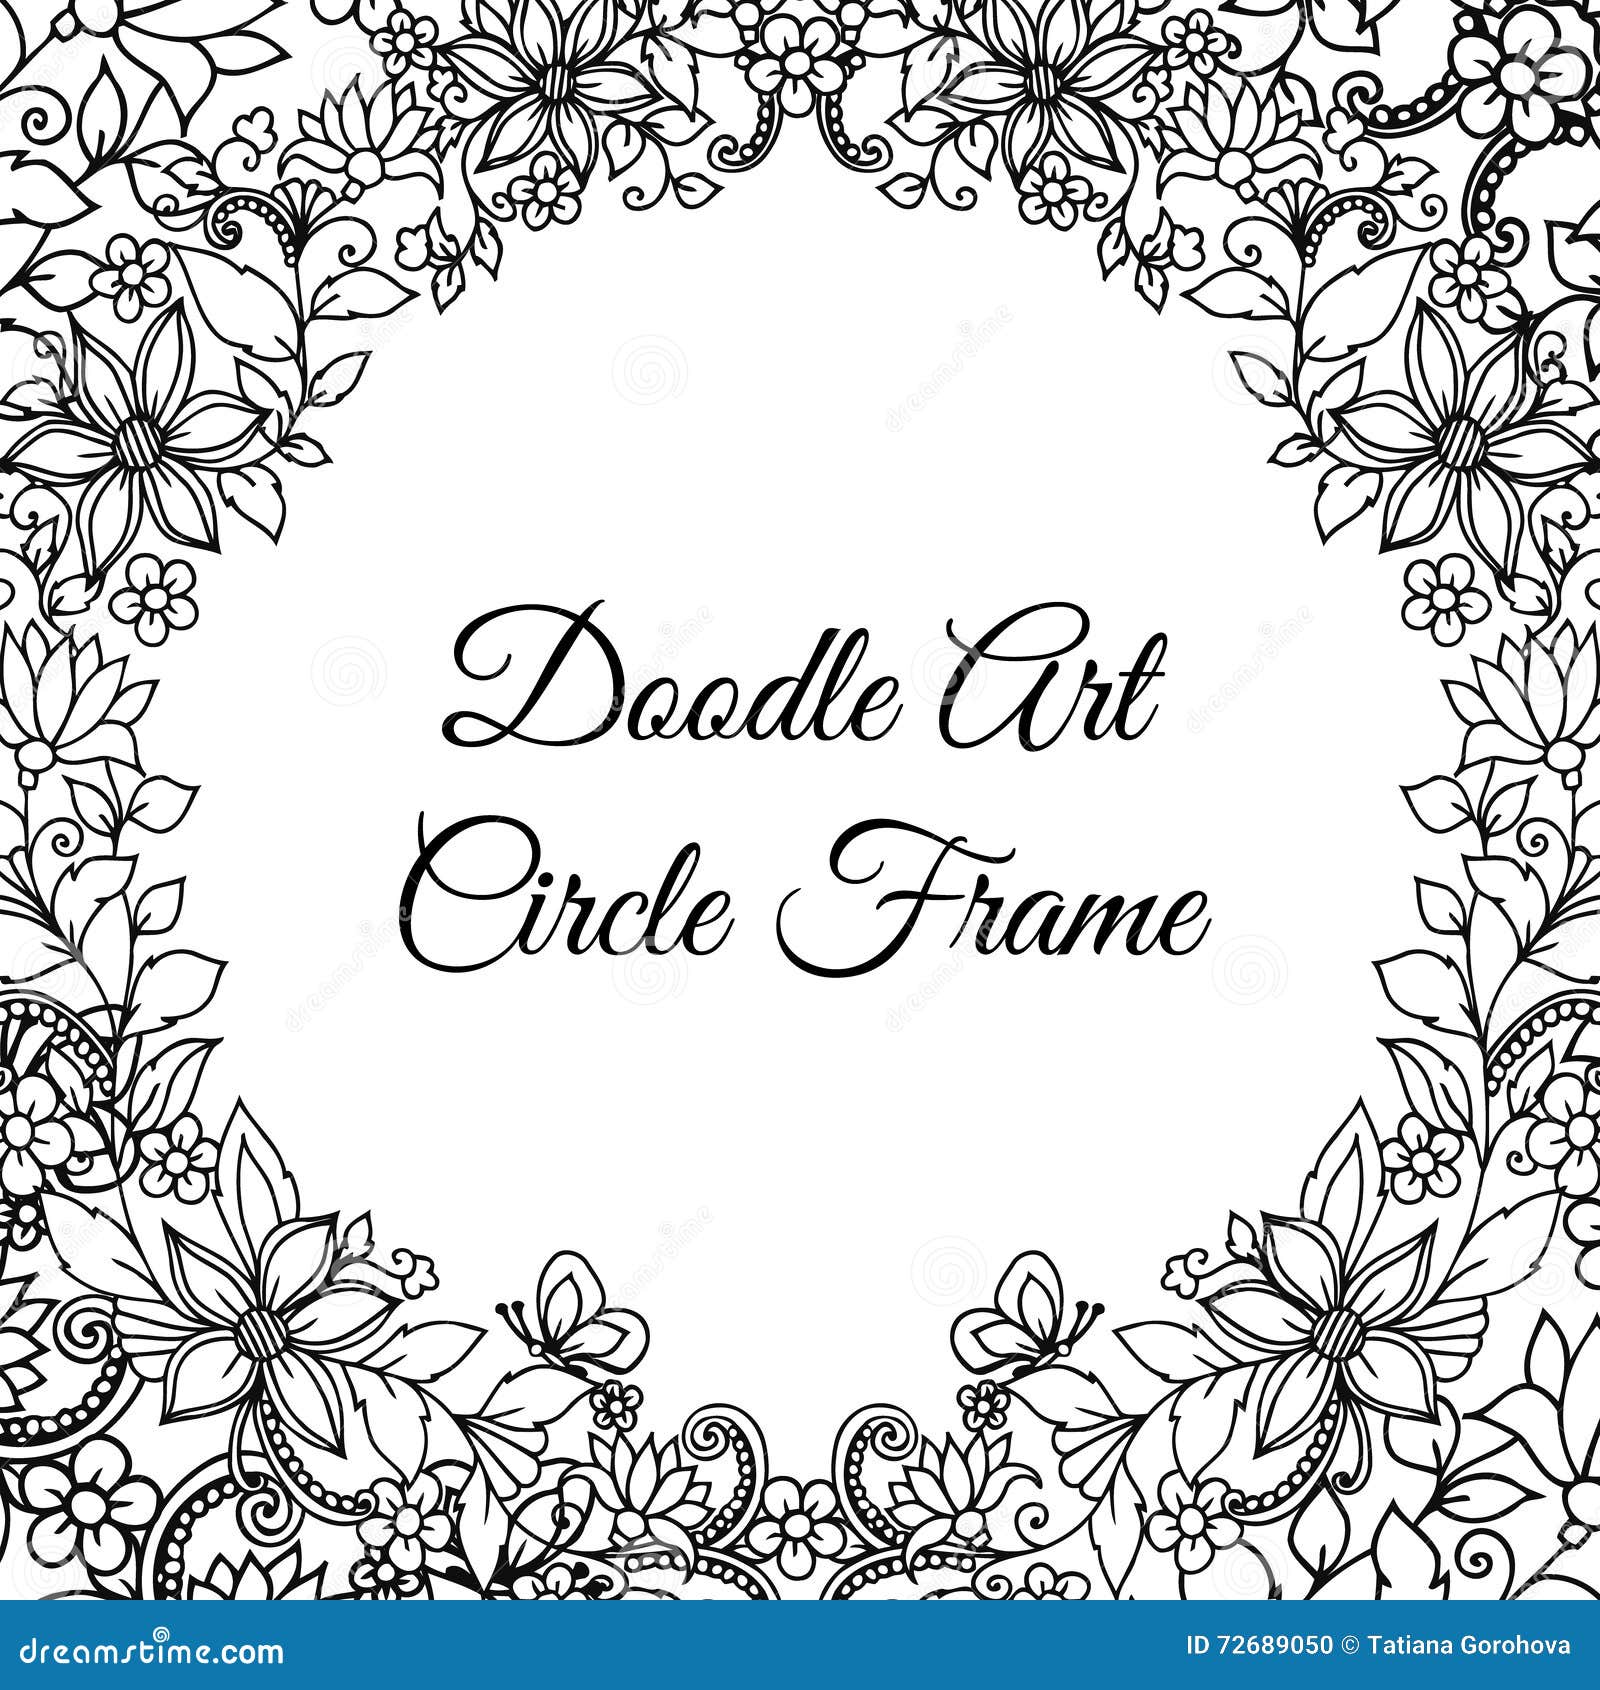 vector illustration floral frame zen tangle dudlart coloring book anti stress adults black white